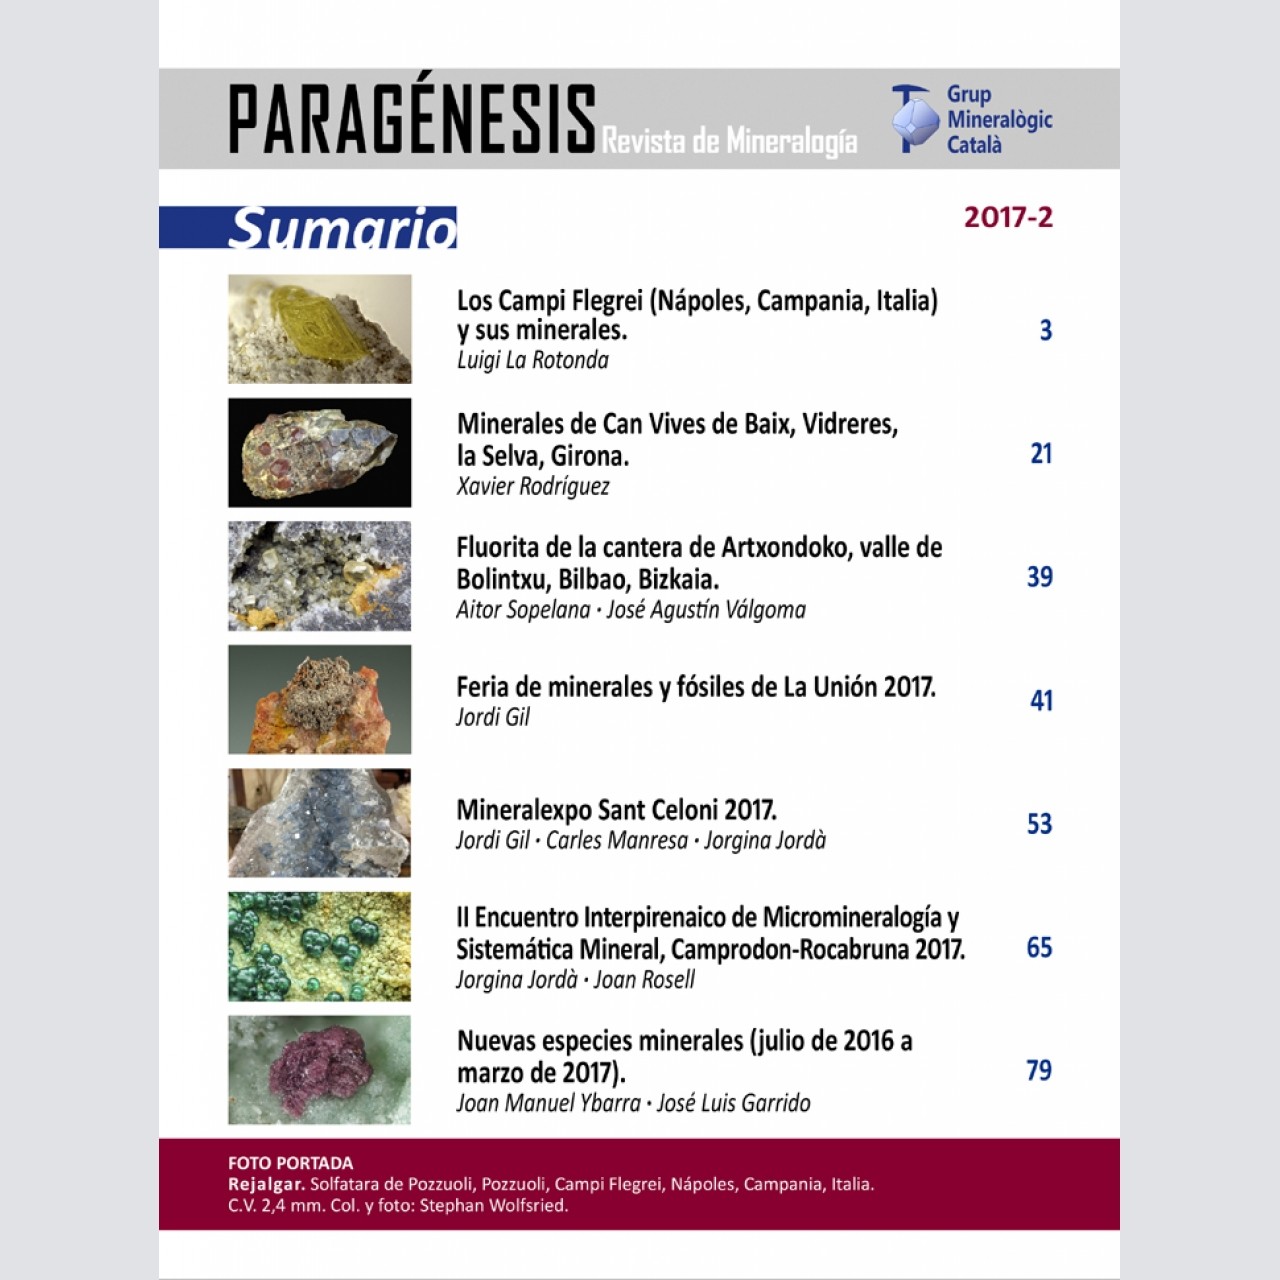 Paragénesis. Revista de Mineralogía (2017-2)